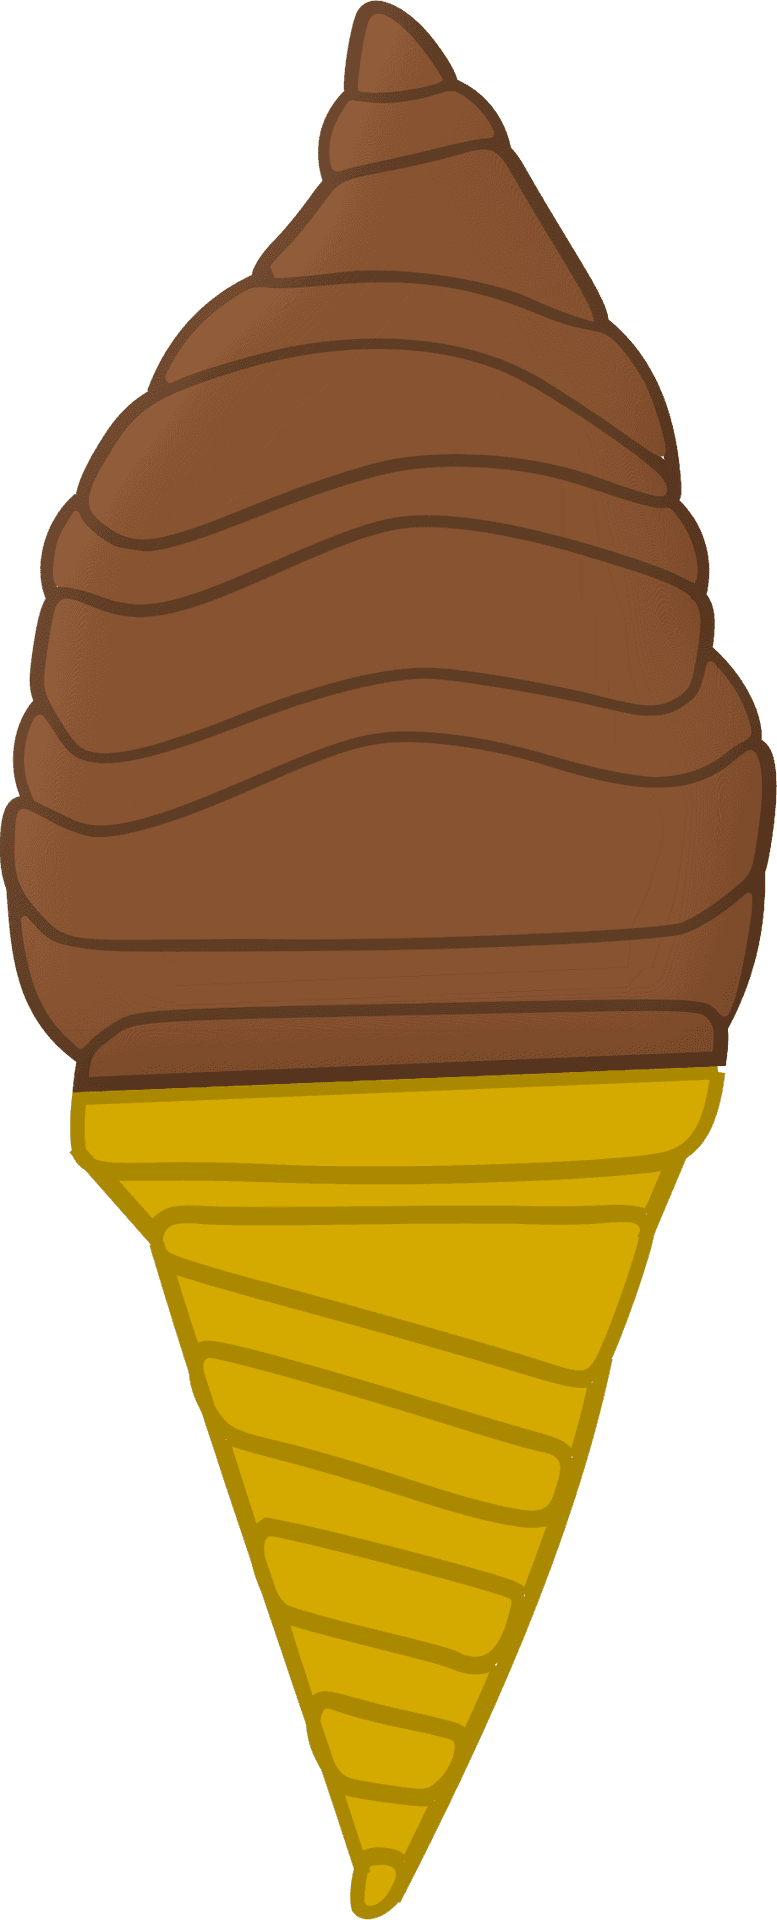 Chocolate Ice Cream Cone Illustration PNG